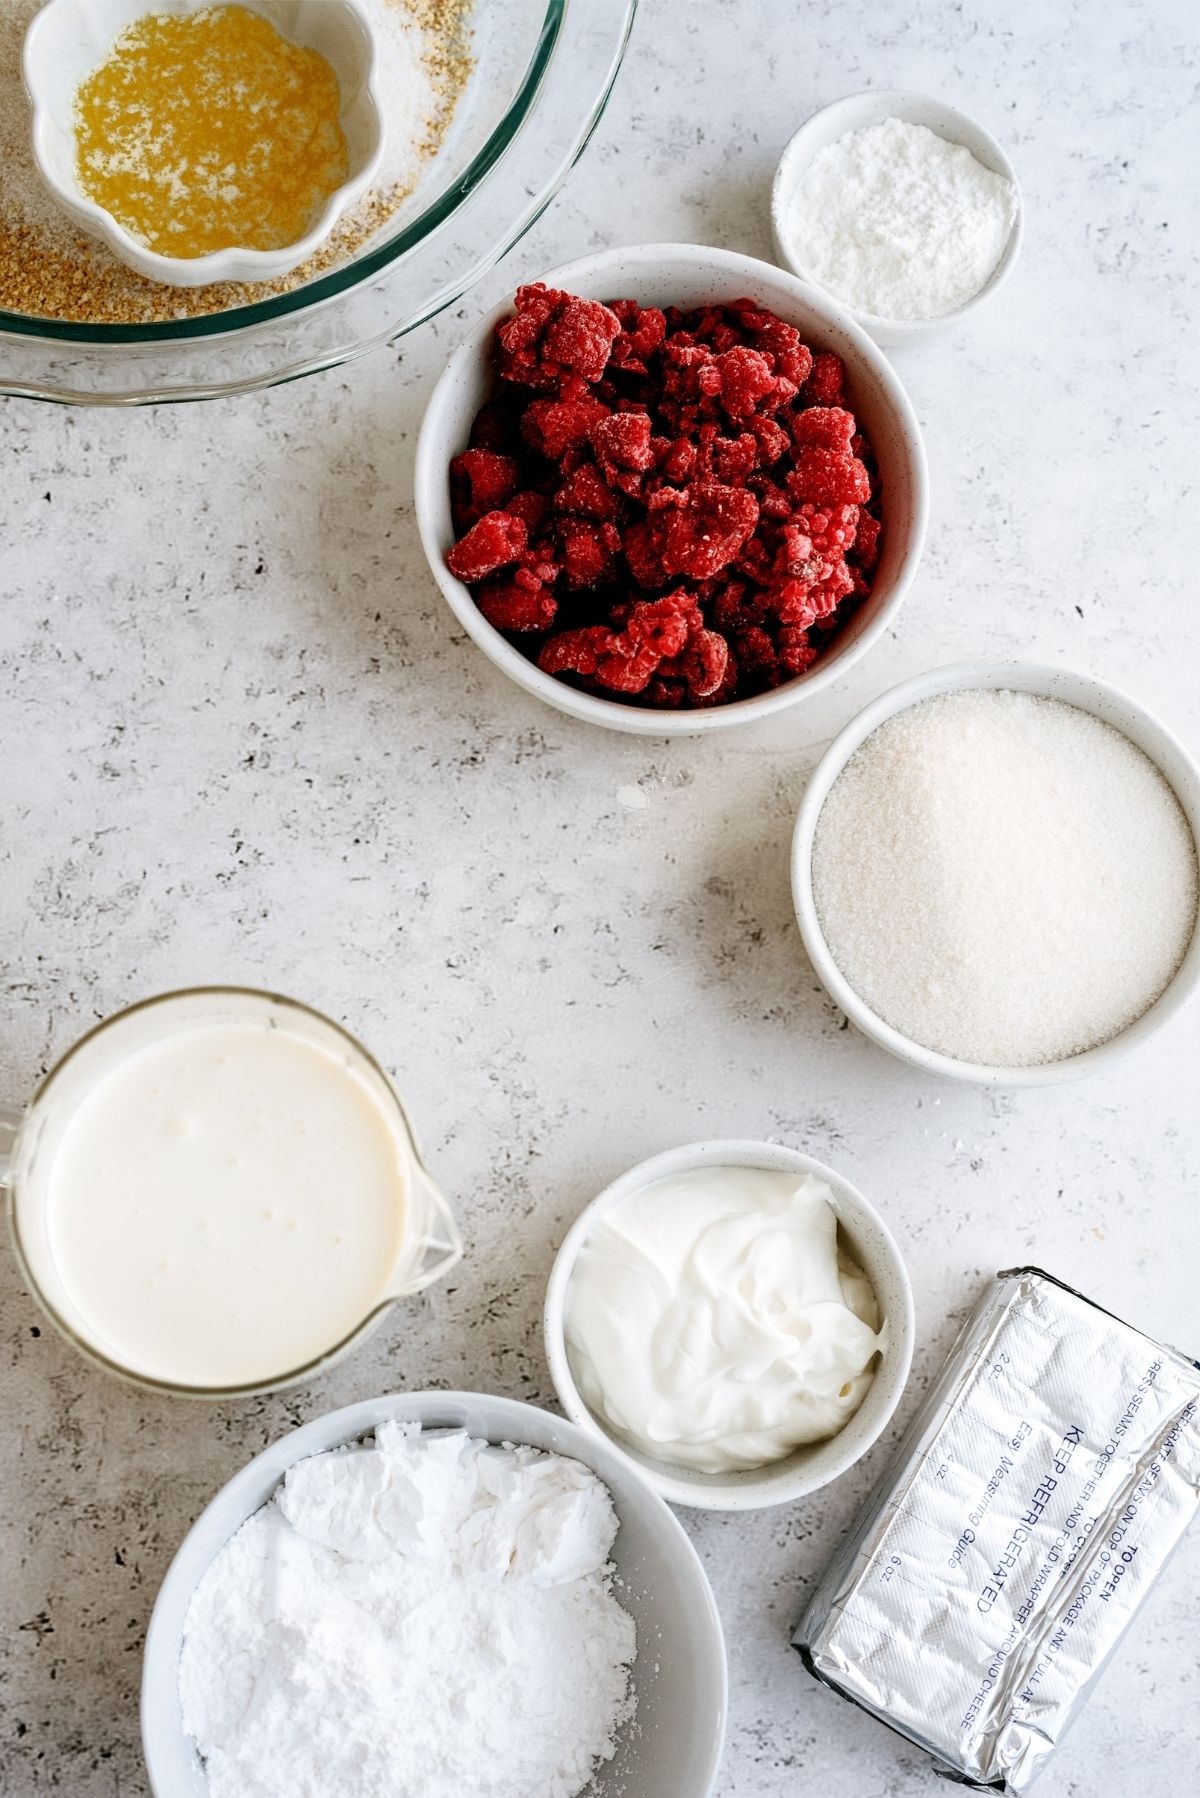 Ingredients for Raspberry Cream Cheese Pie